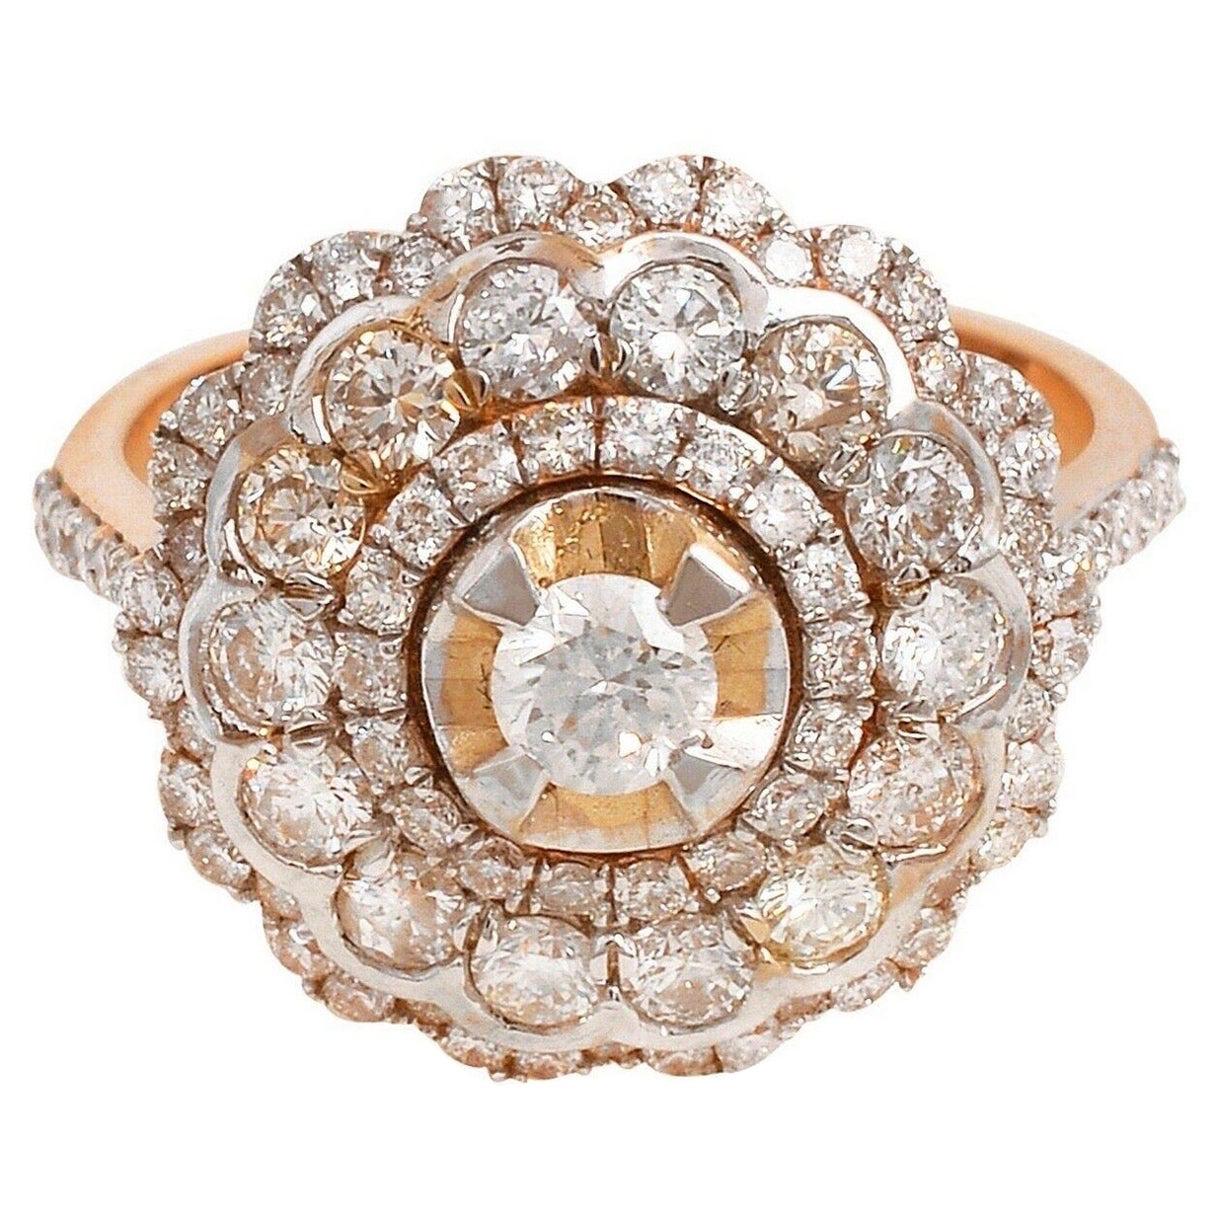 For Sale:  1.85 Carat Diamond Antique Style 18 Karat Rose Gold Ring